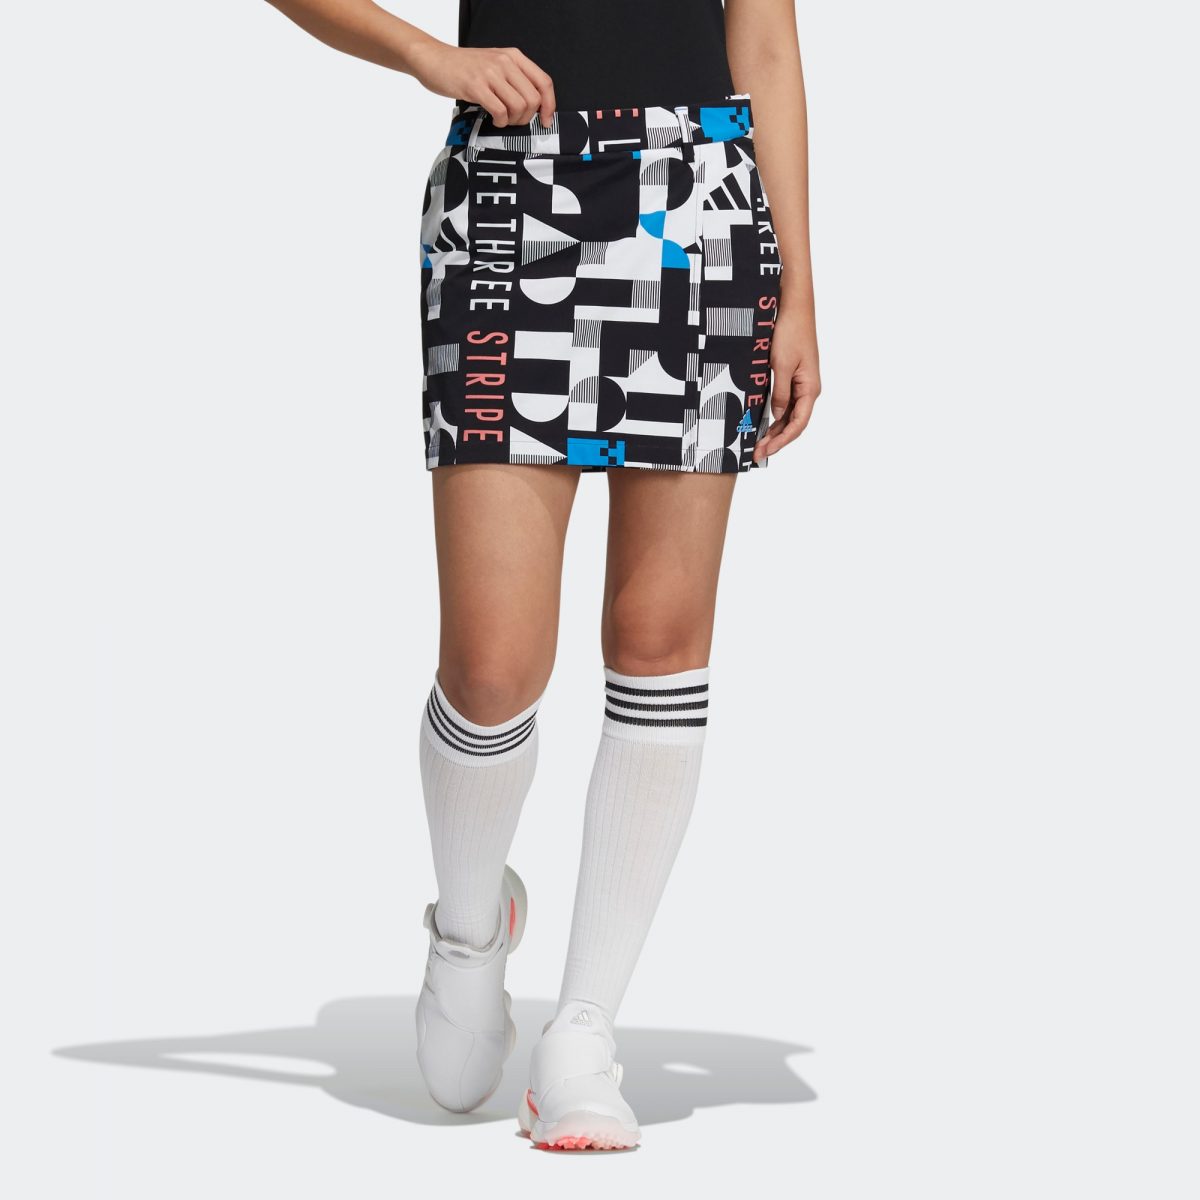 Женская юбка adidas GRAPHIC SKIRT фото